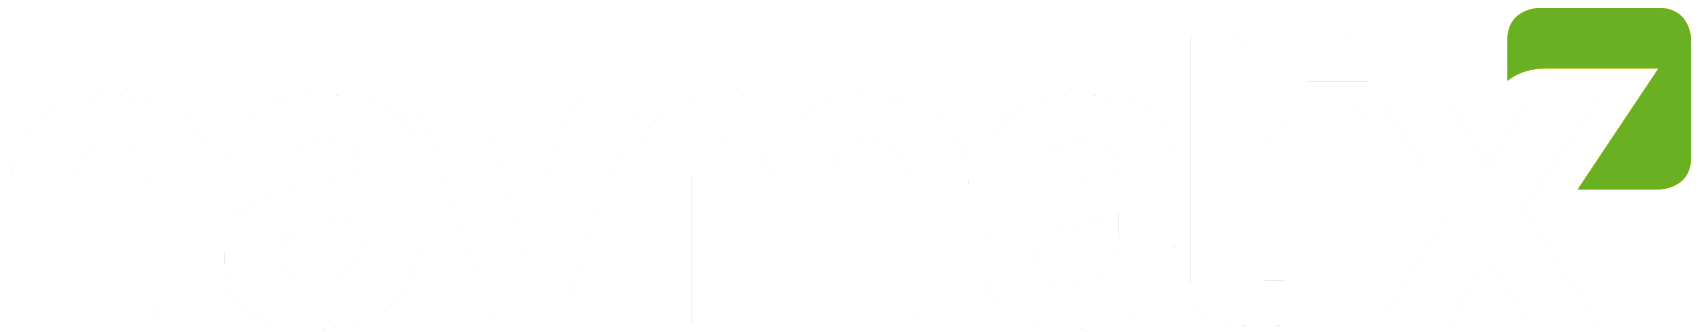 navmatix-logo